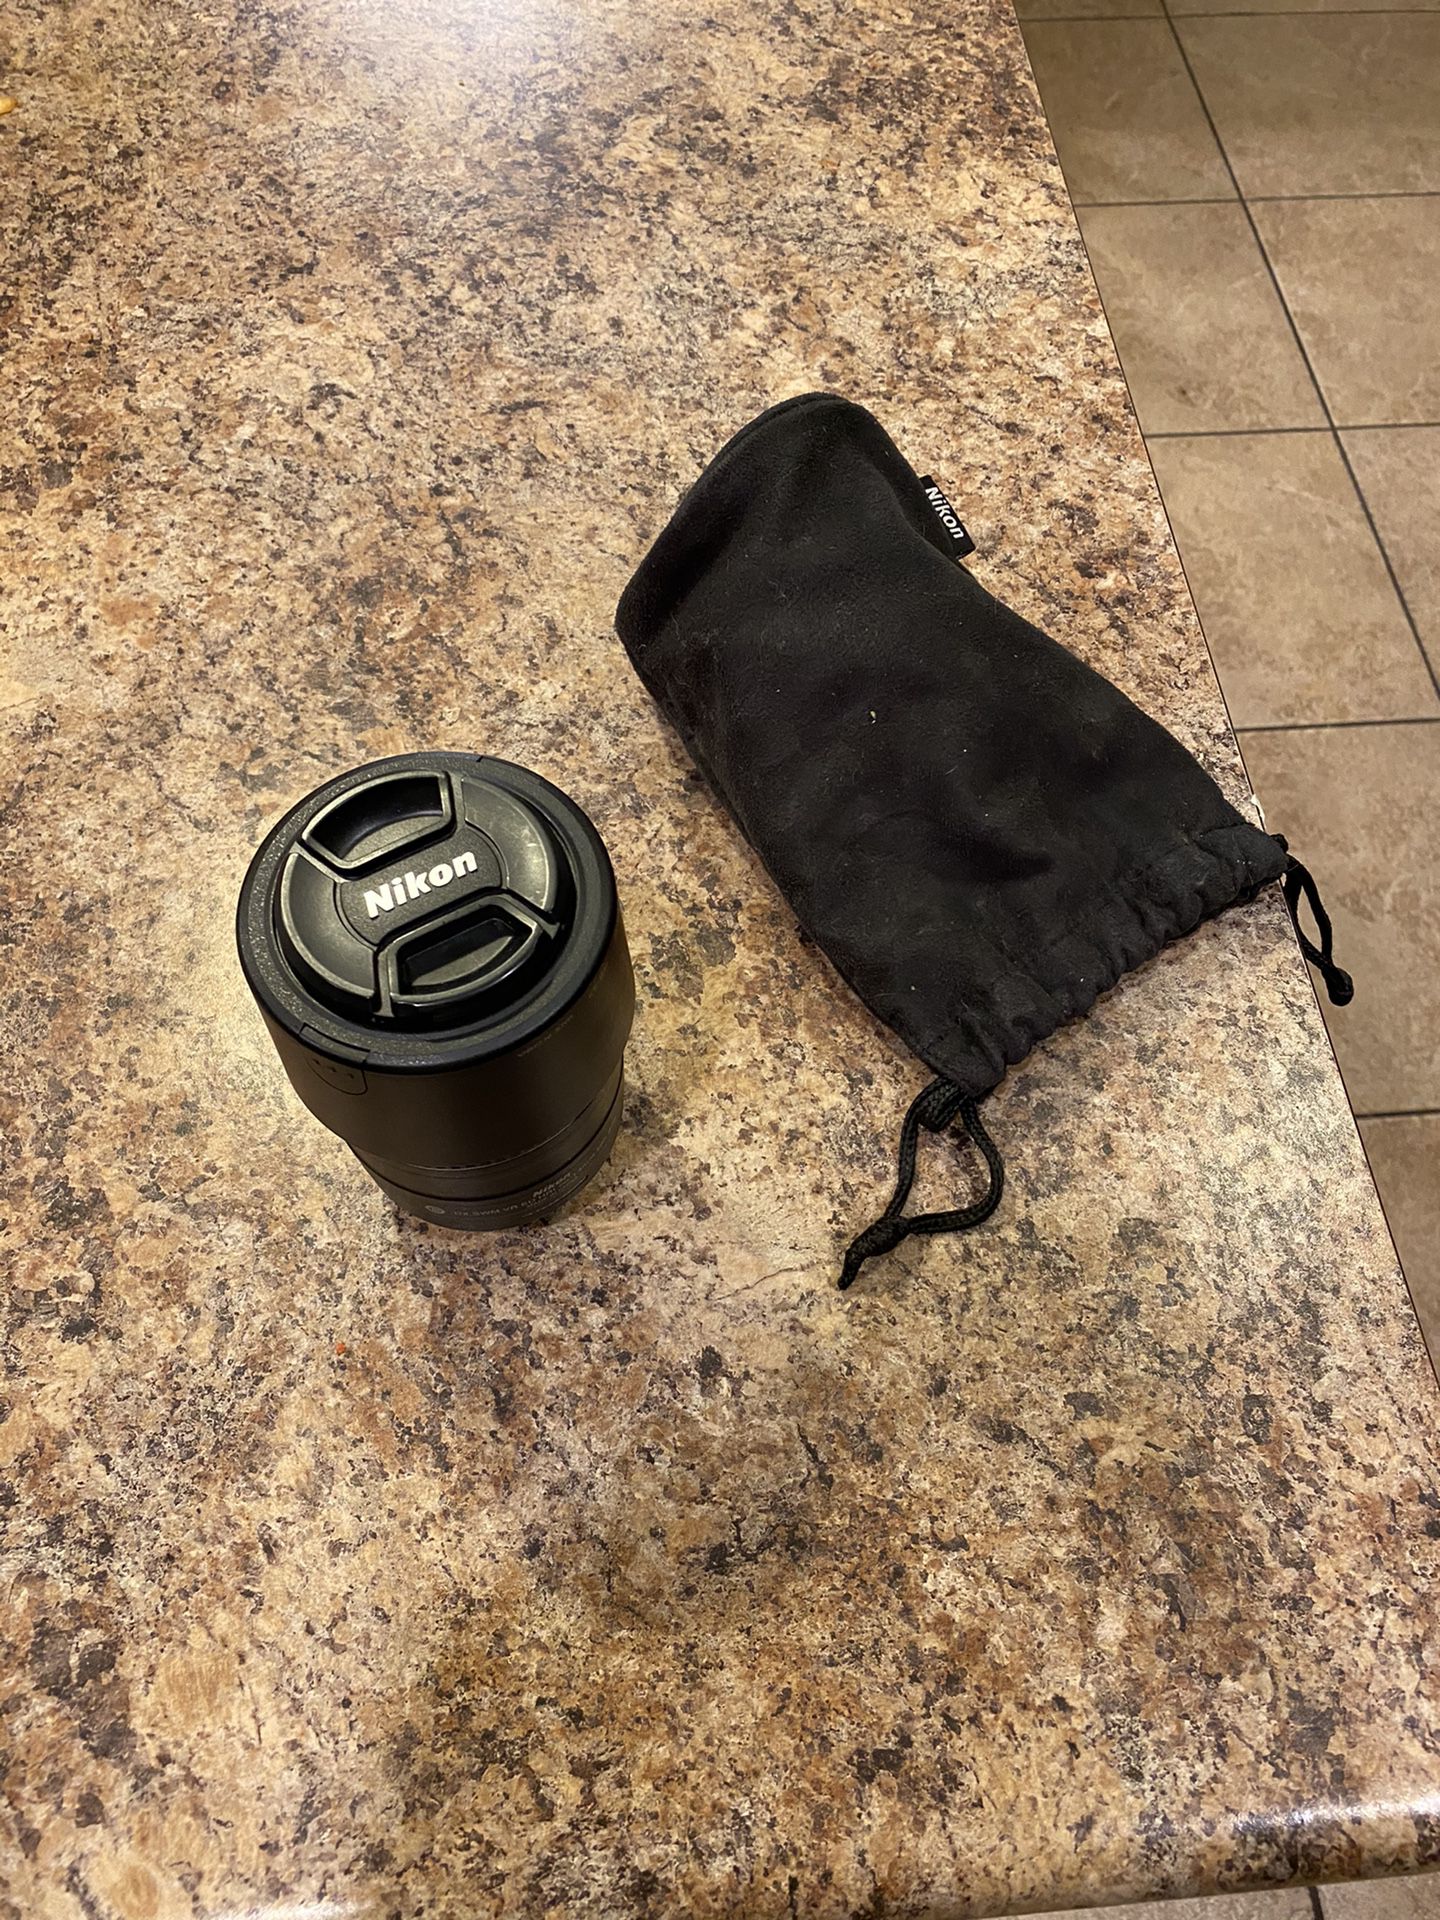 Nikon camera Lens and bag